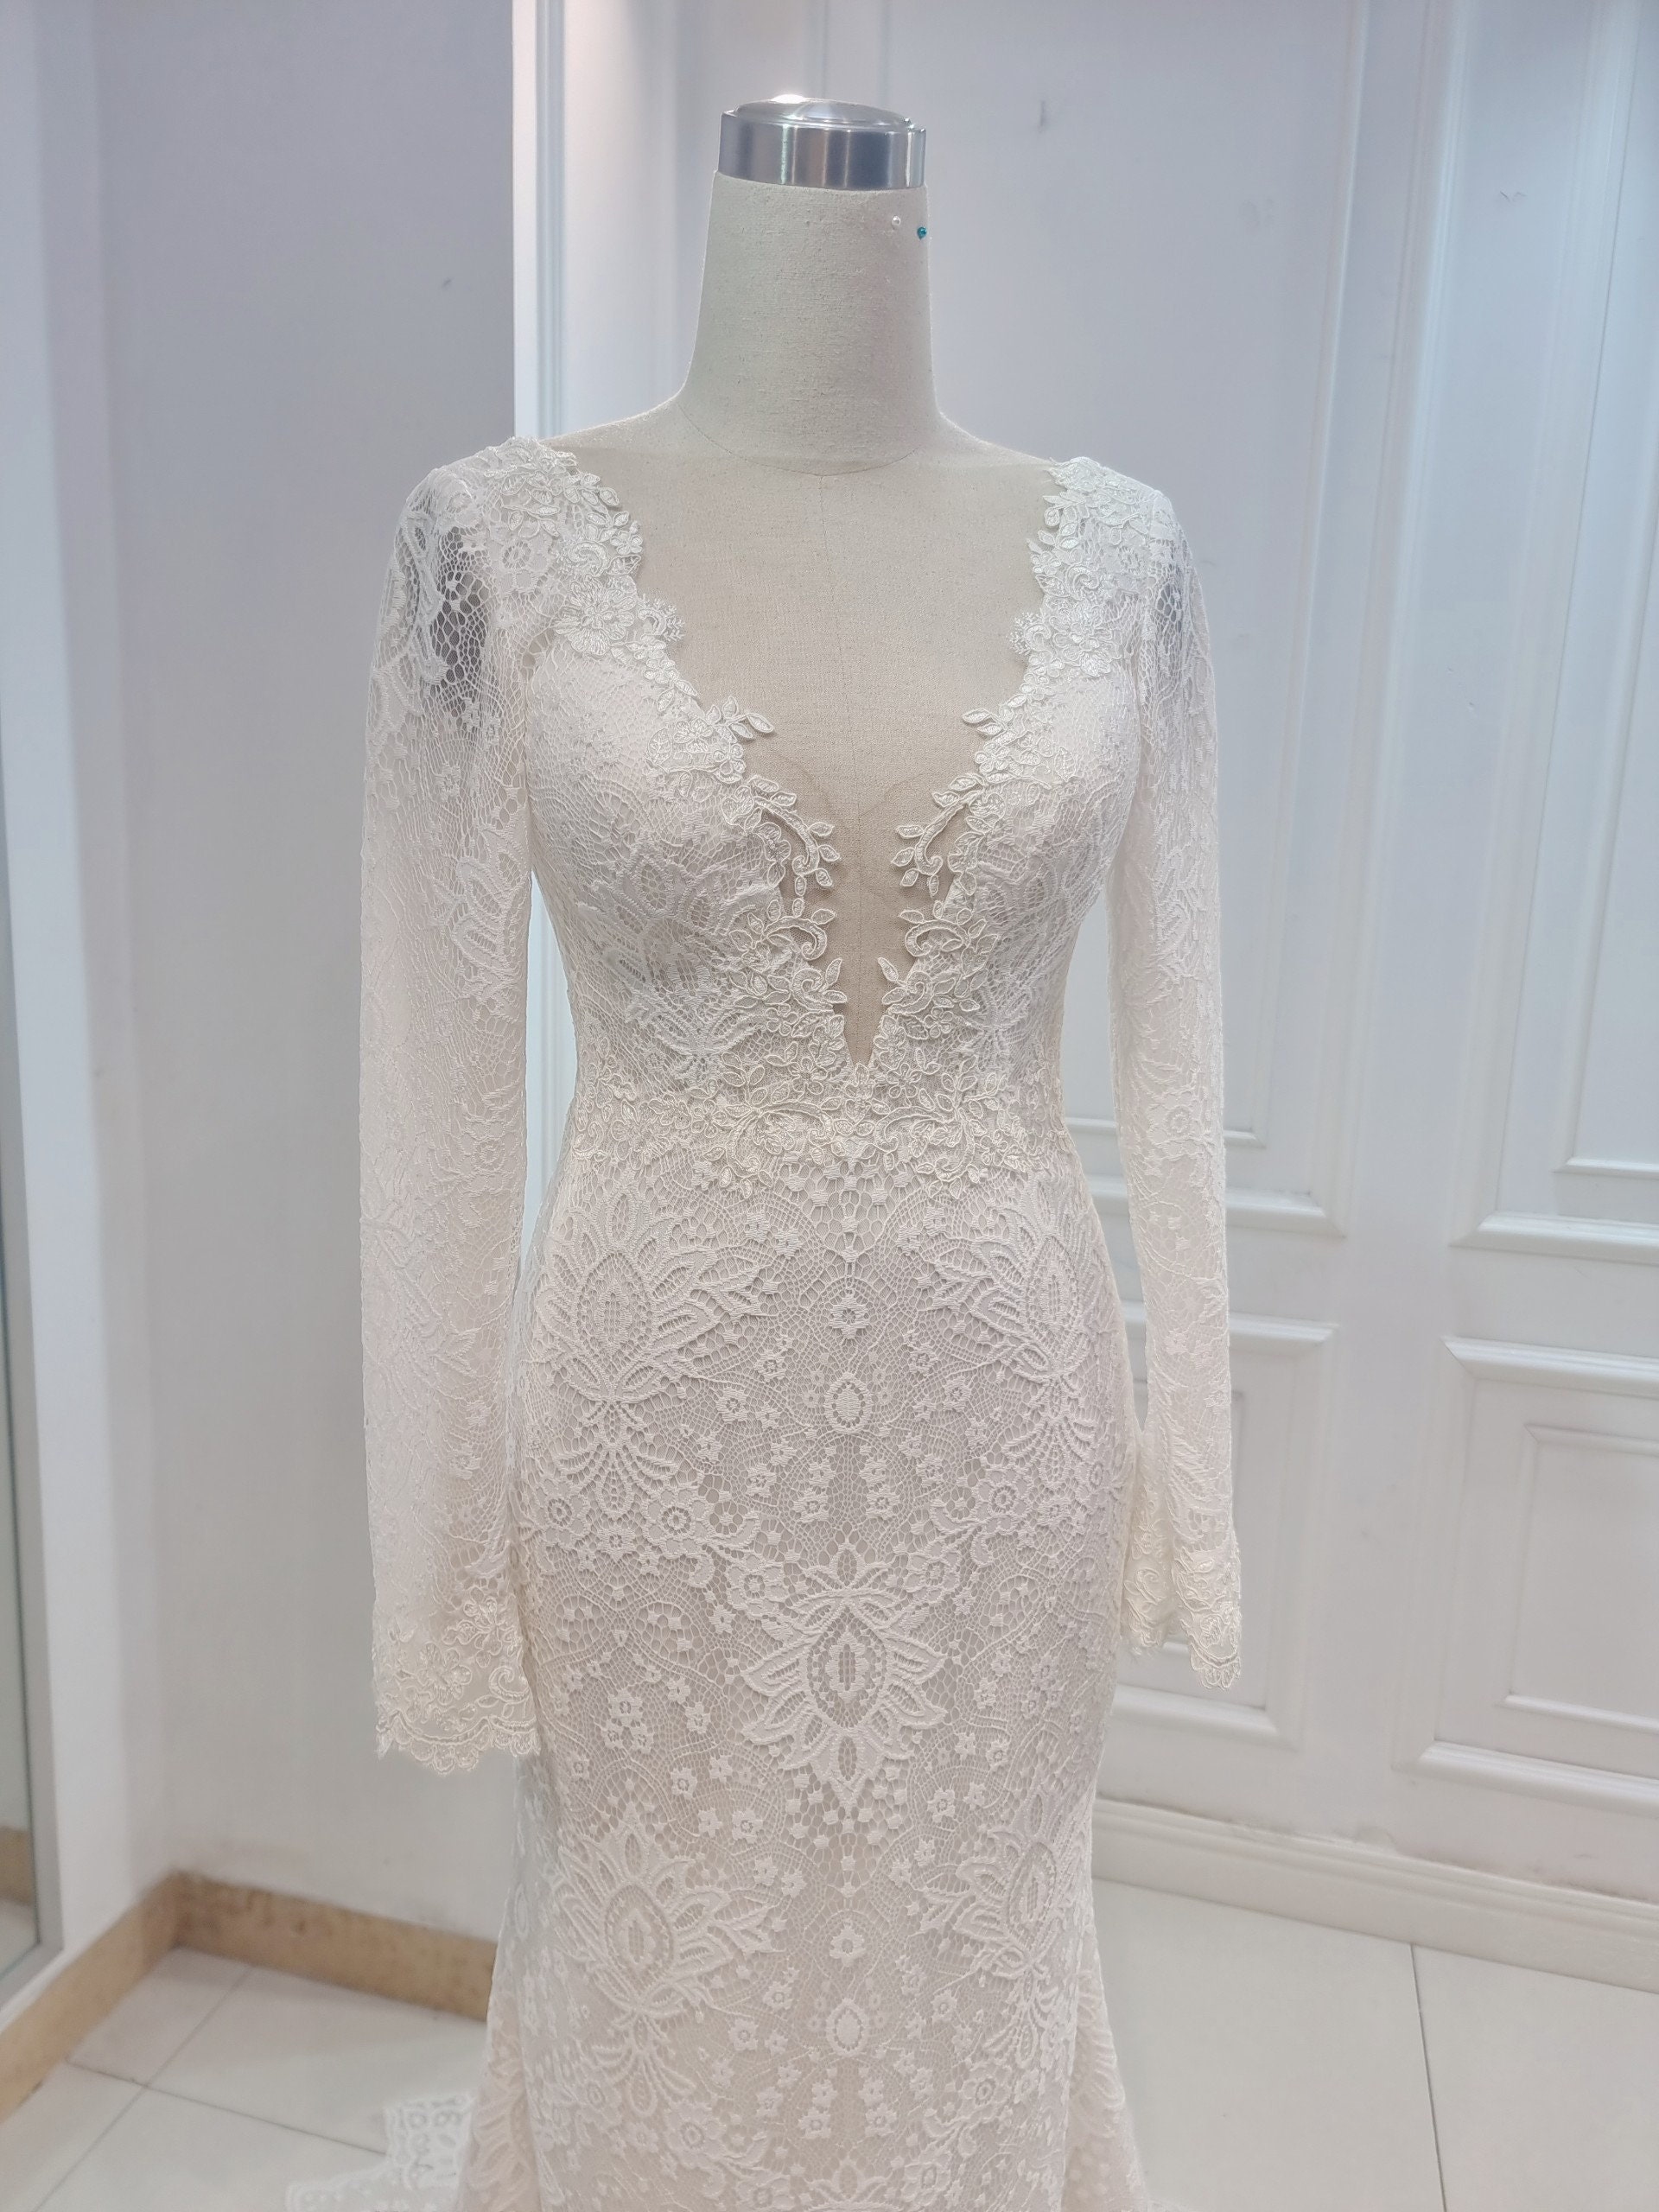 2 in 1 Wedding Dress. French Lace Mermaid Wedding Dress. - Etsy